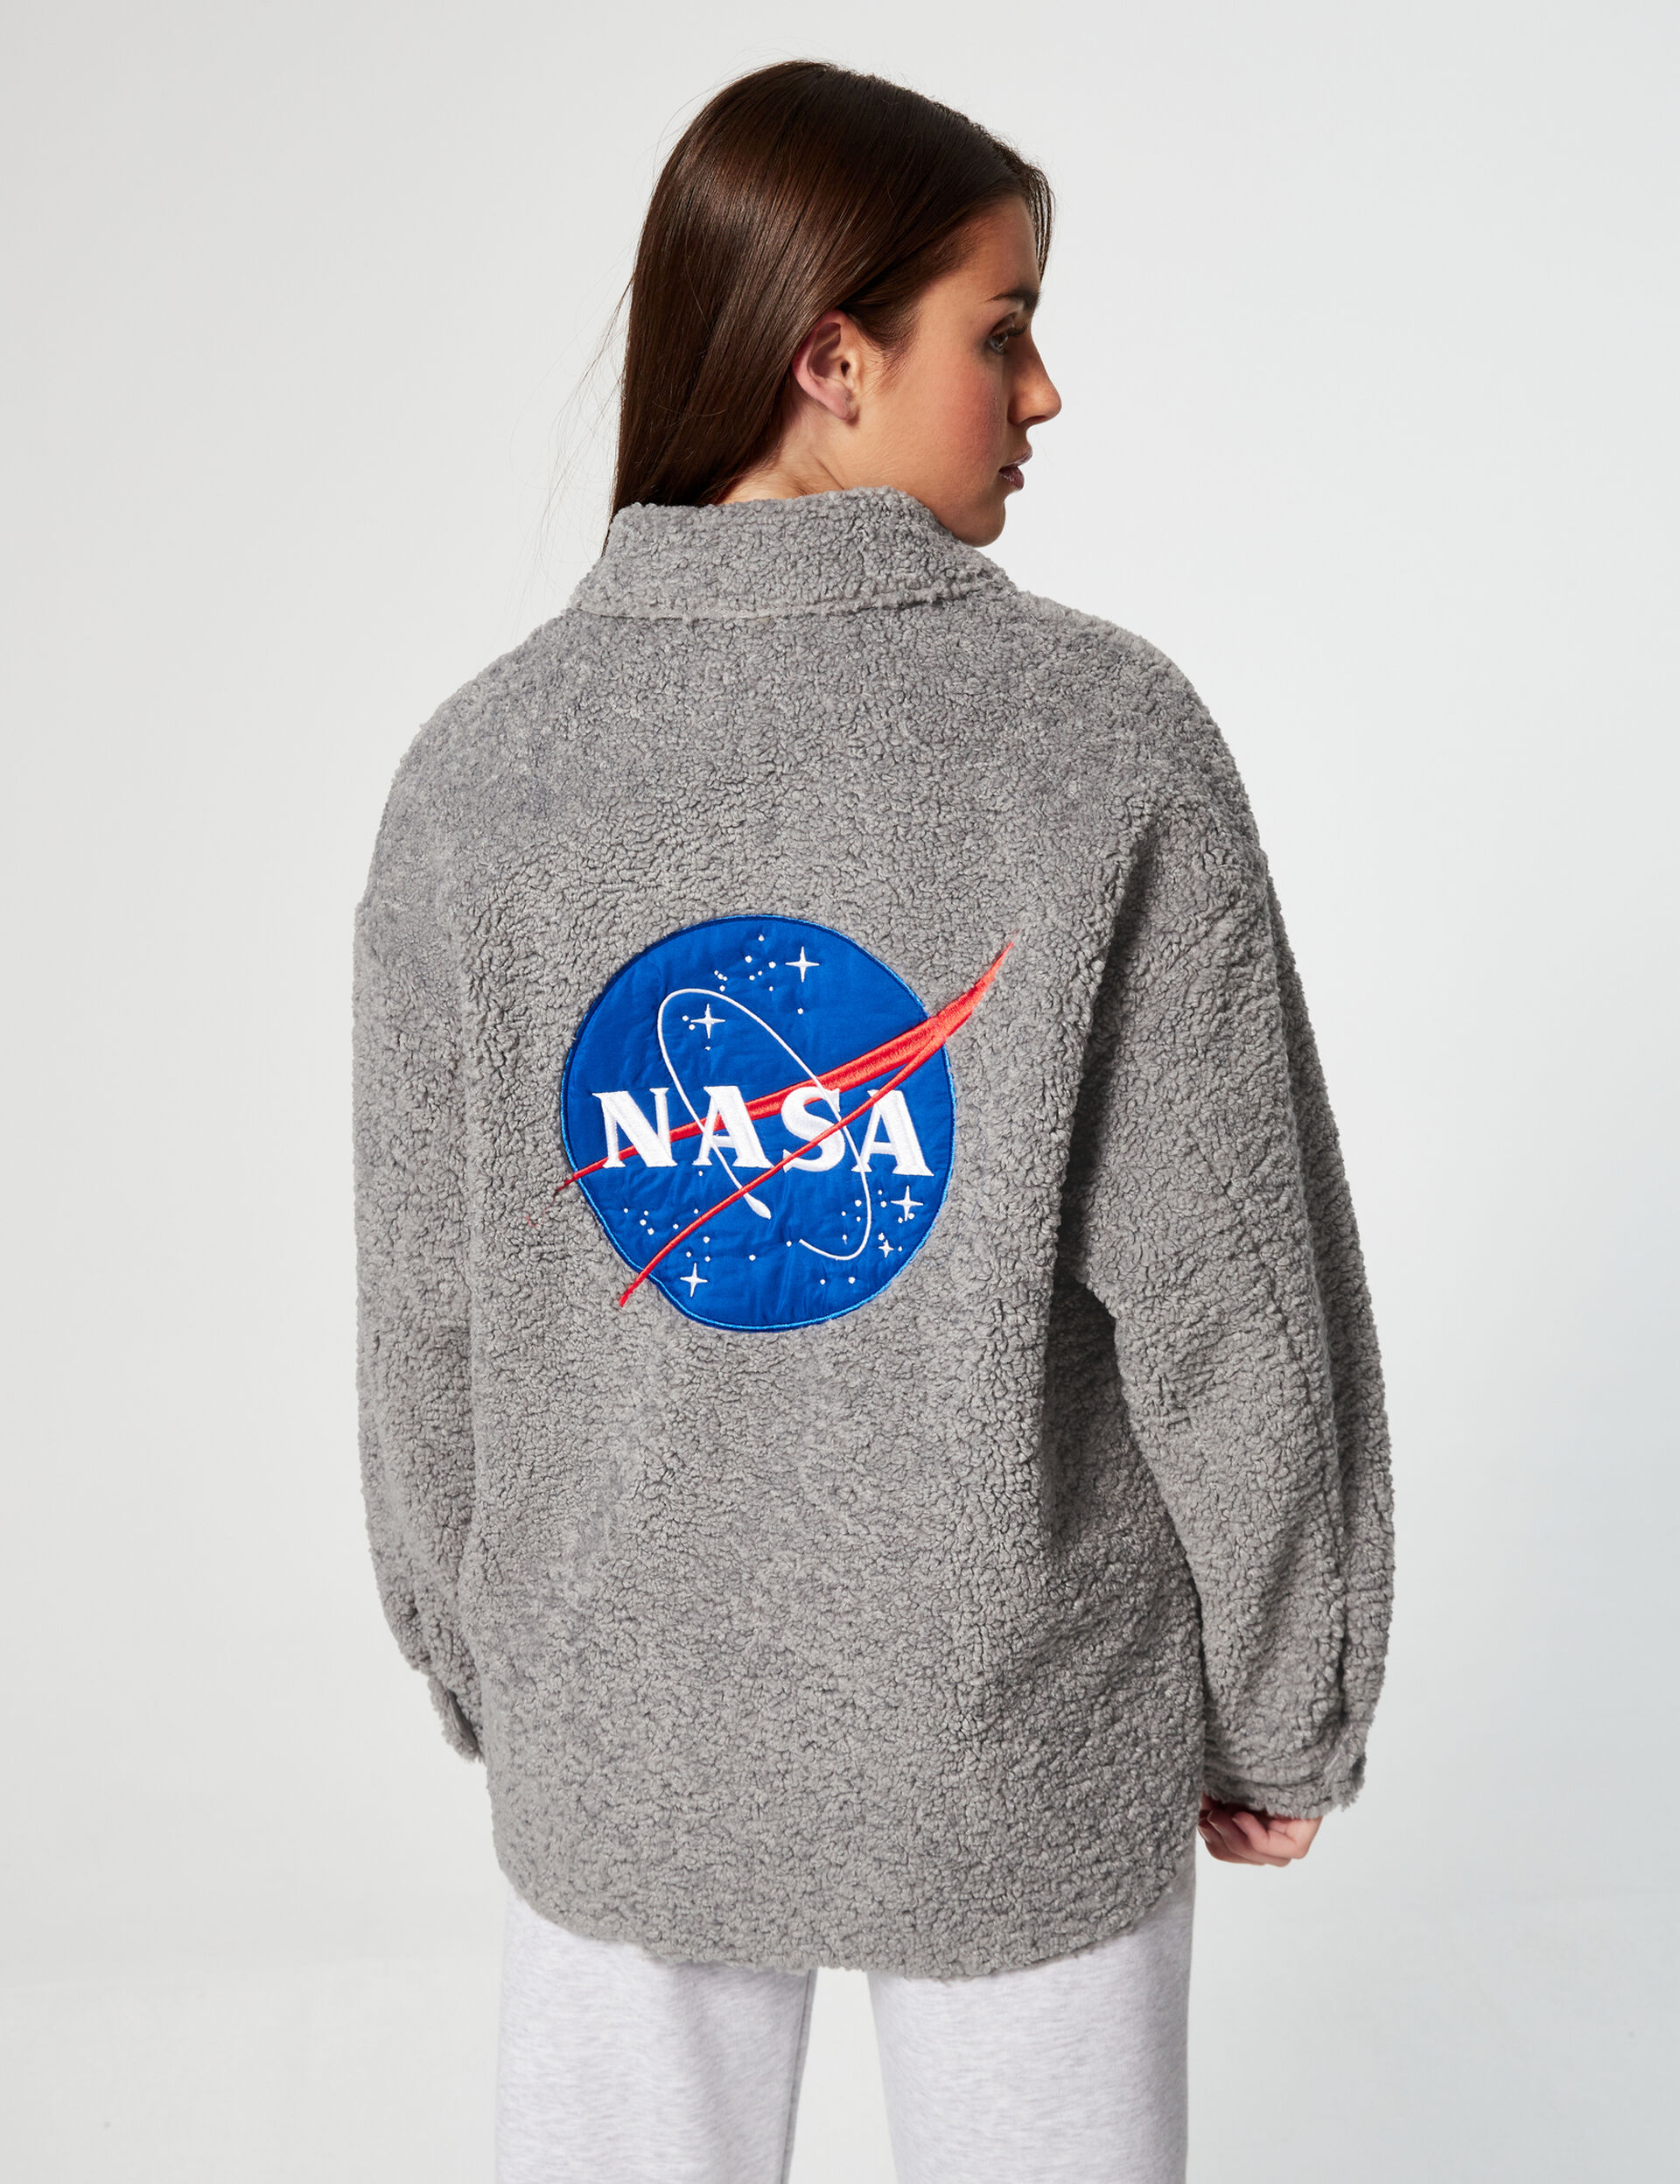 Veste NASA effet mouton